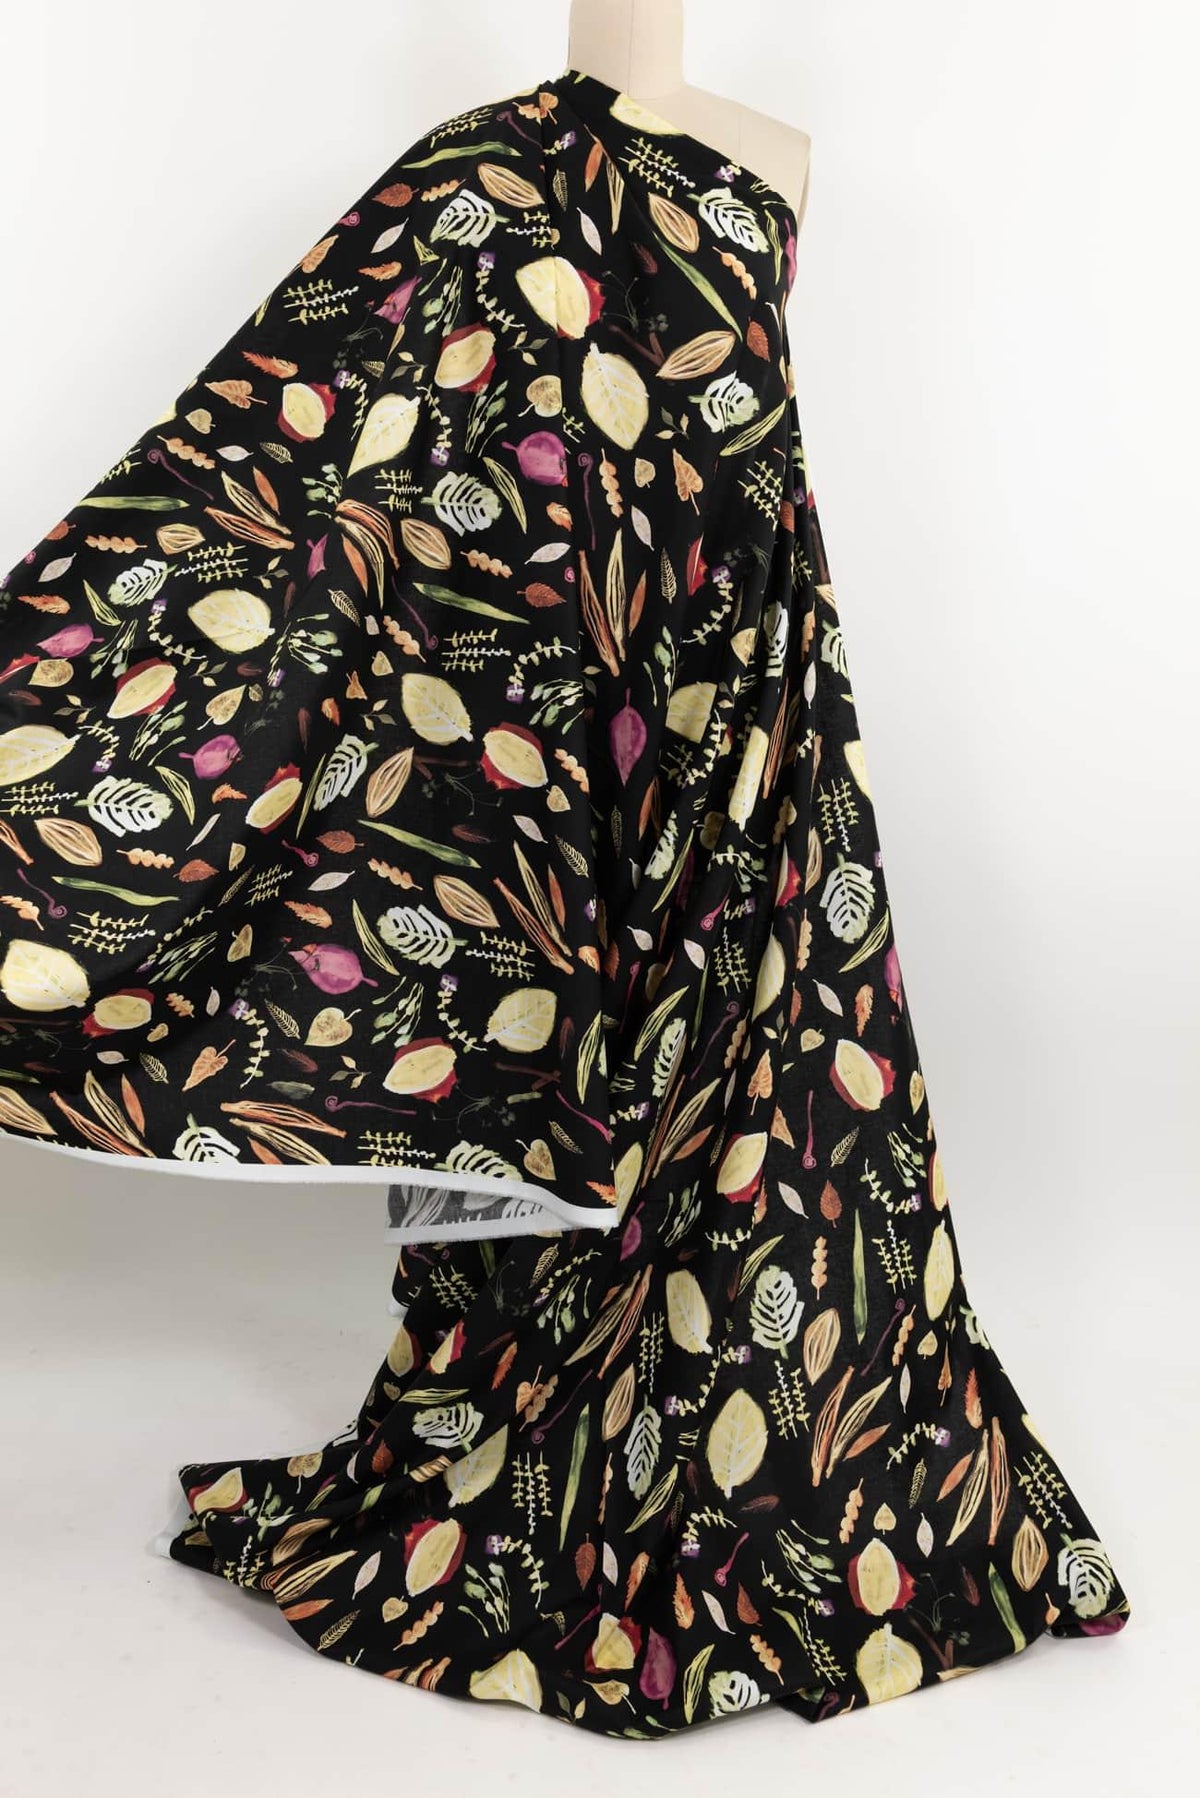 Botanica Japanese Cotton - Marcy Tilton Fabrics